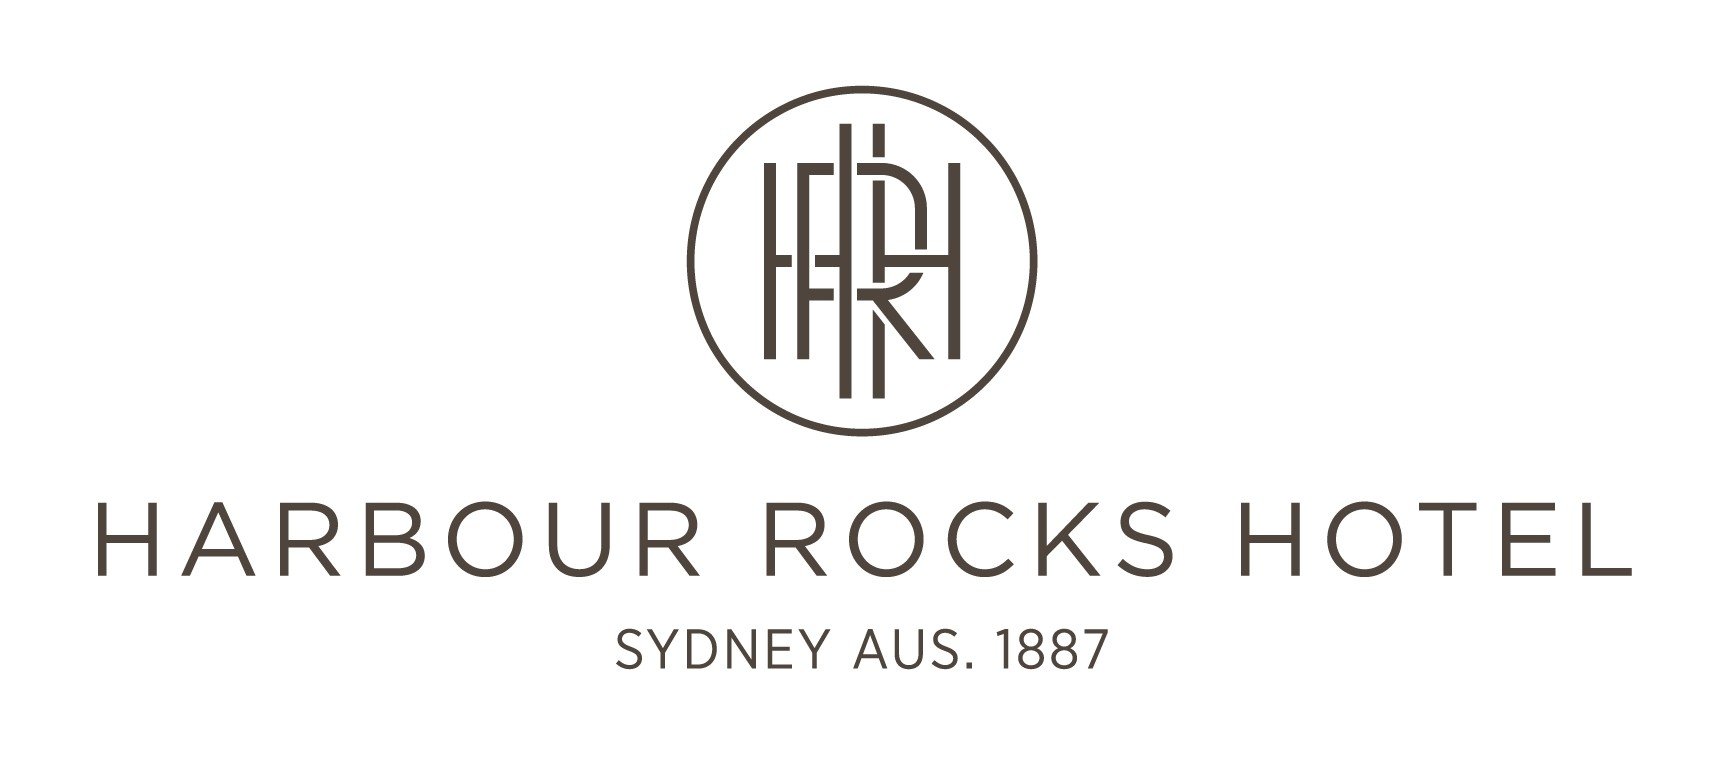 Harbour Rocks Hotel Sydney